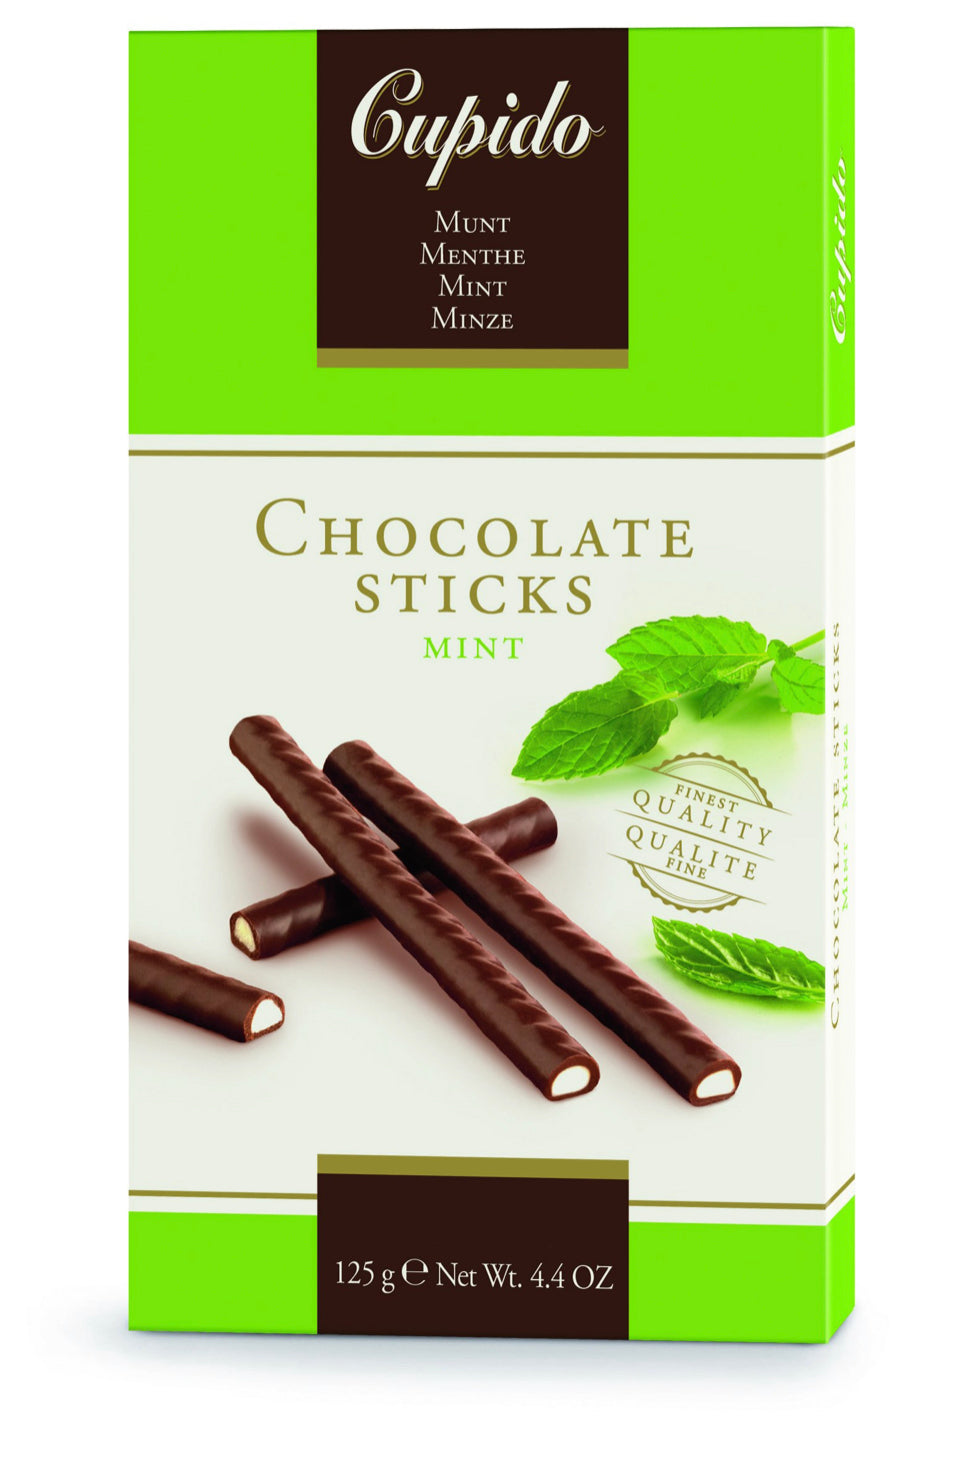 Mint chocolate sticks